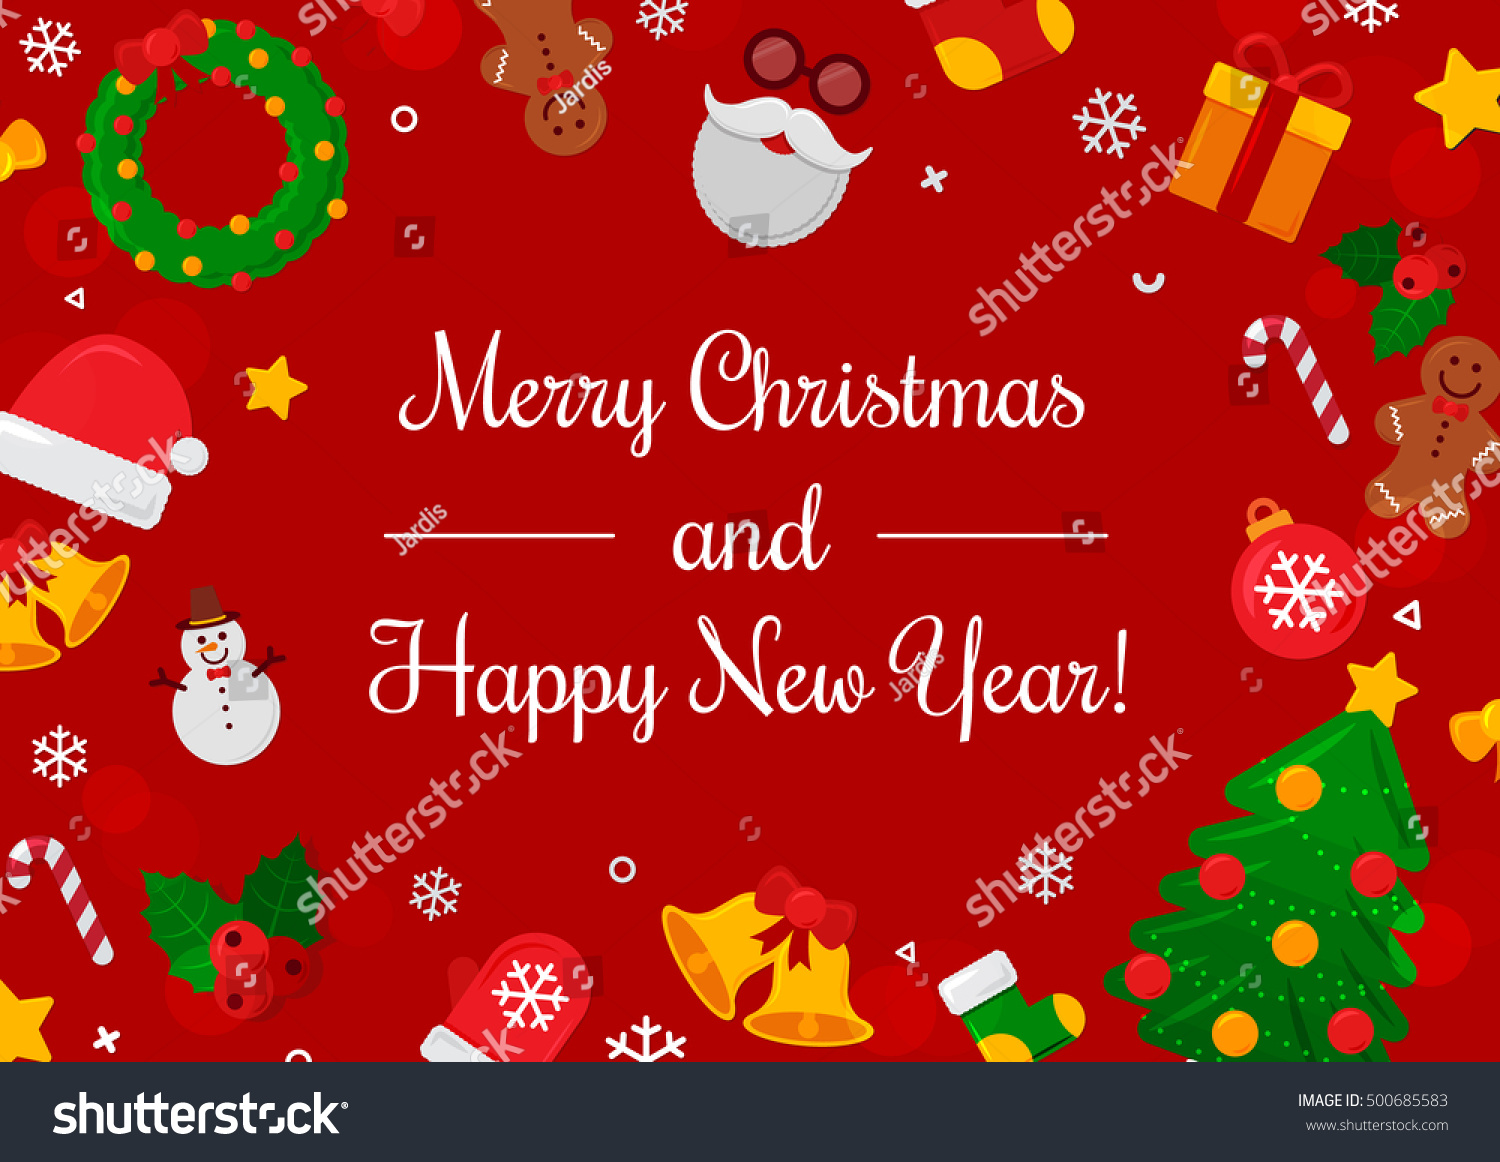 Merry Christmas Background Vector Illustration Flat Stock Vector 500685583 - Shutterstock